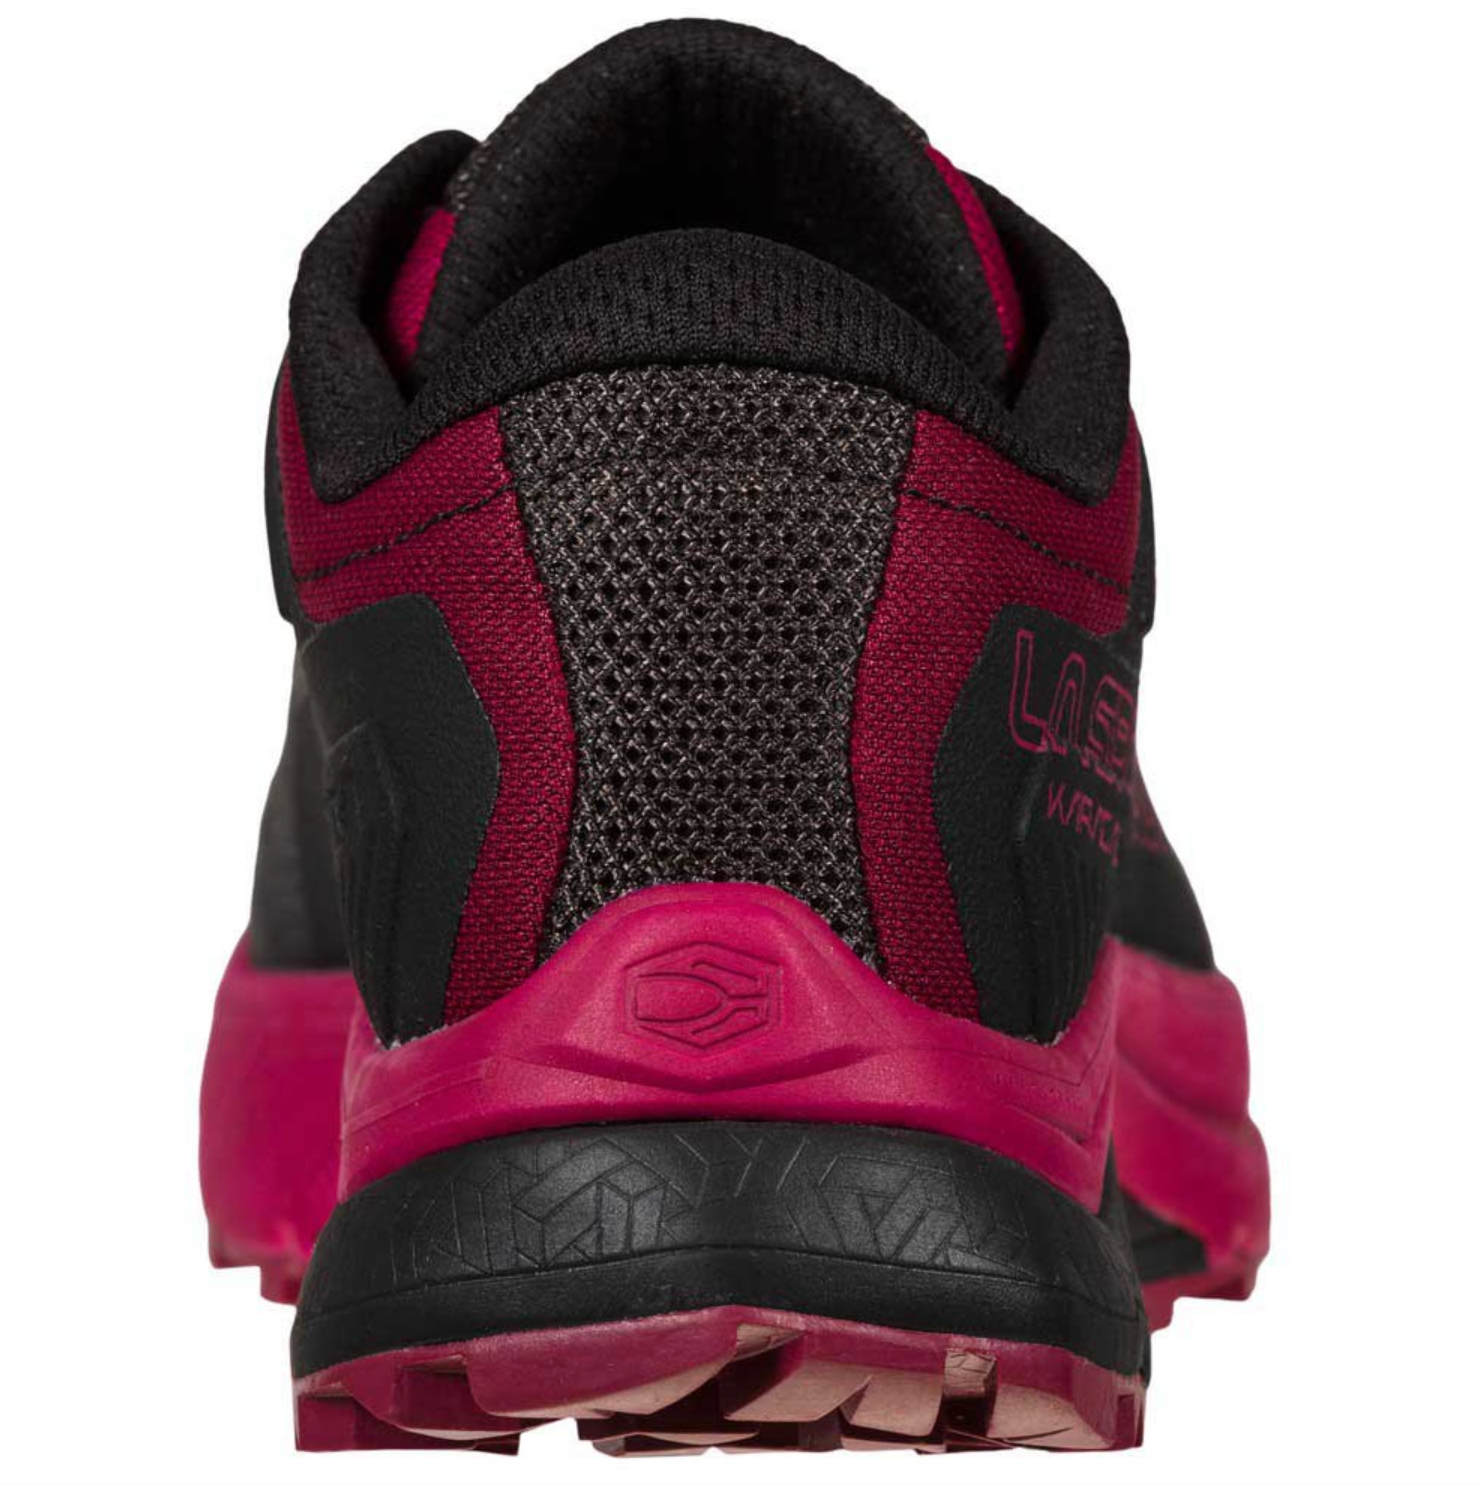 La Sportiva Women's Karacal Mountain Running® Shoe